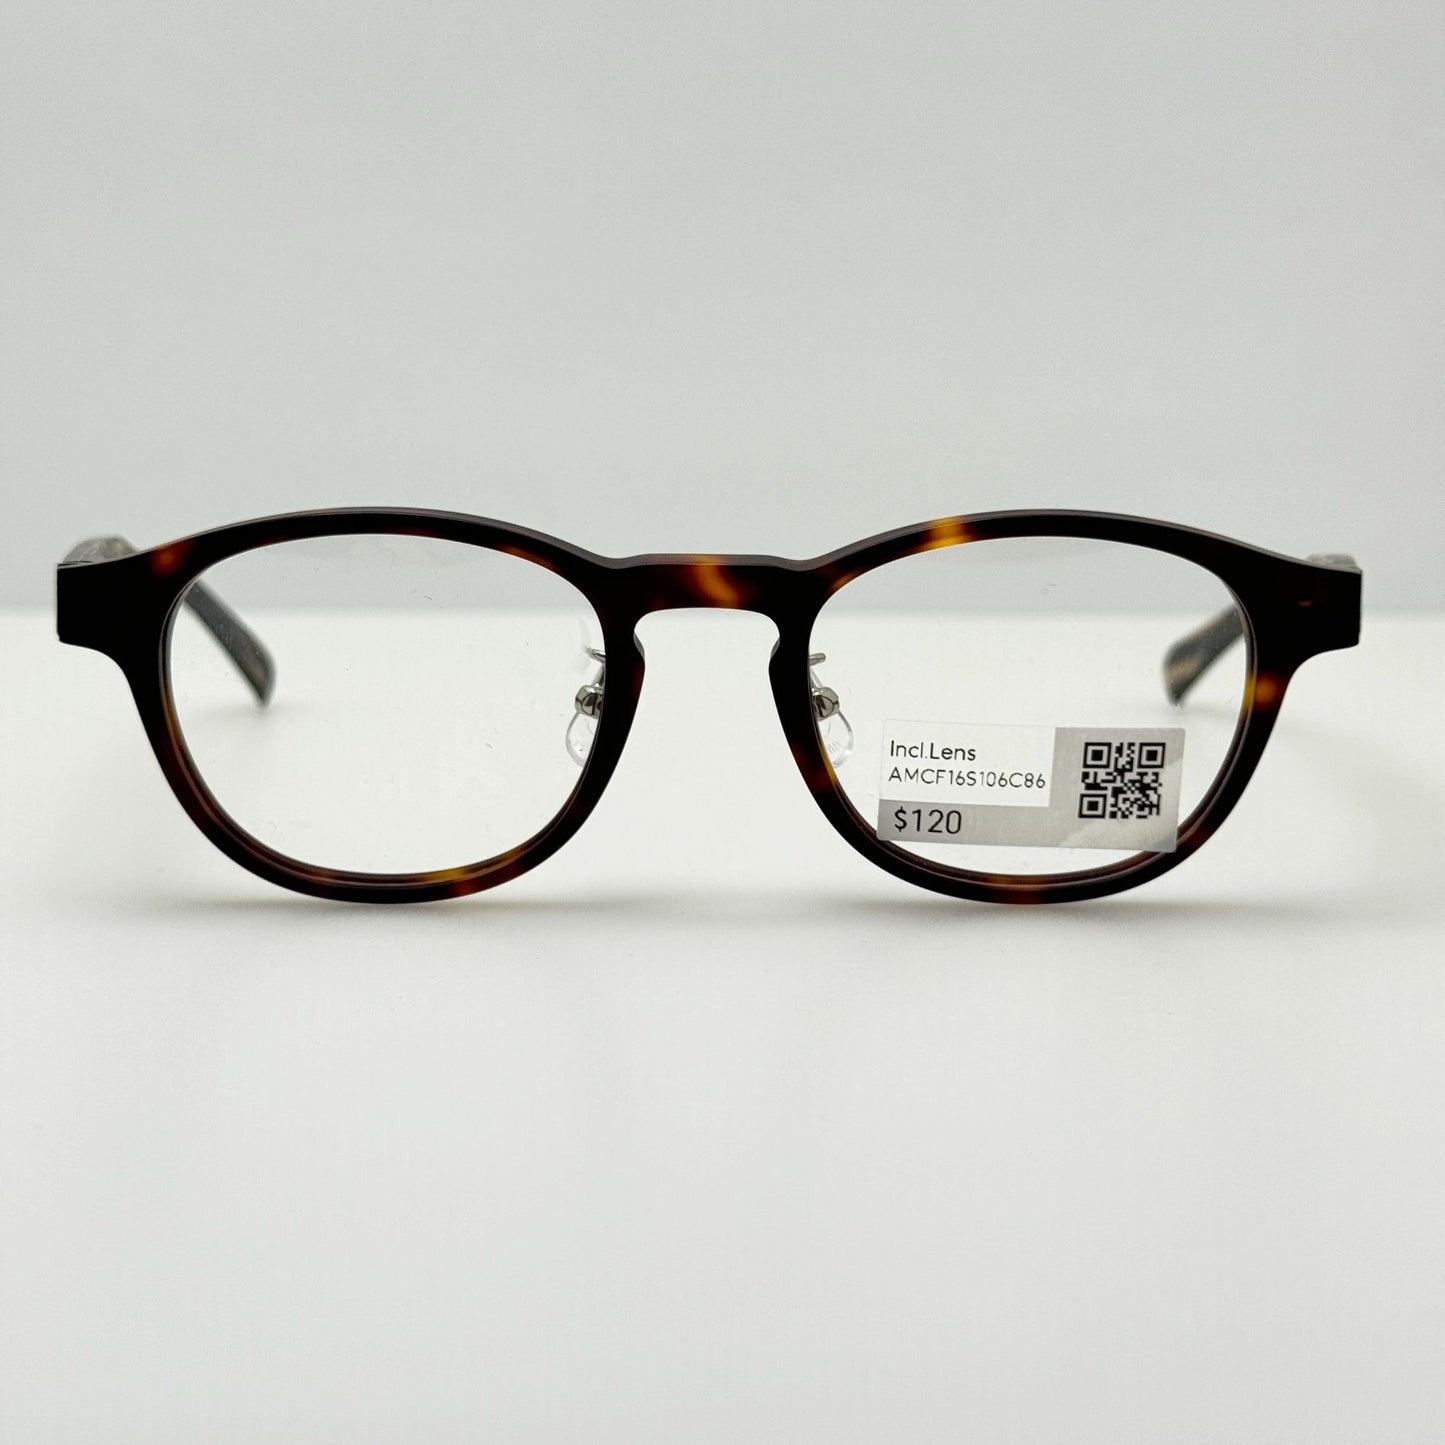 Jins Eyeglasses Eye Glasses Frames MCF-16S-106C 86 48.4-20.6-148 39